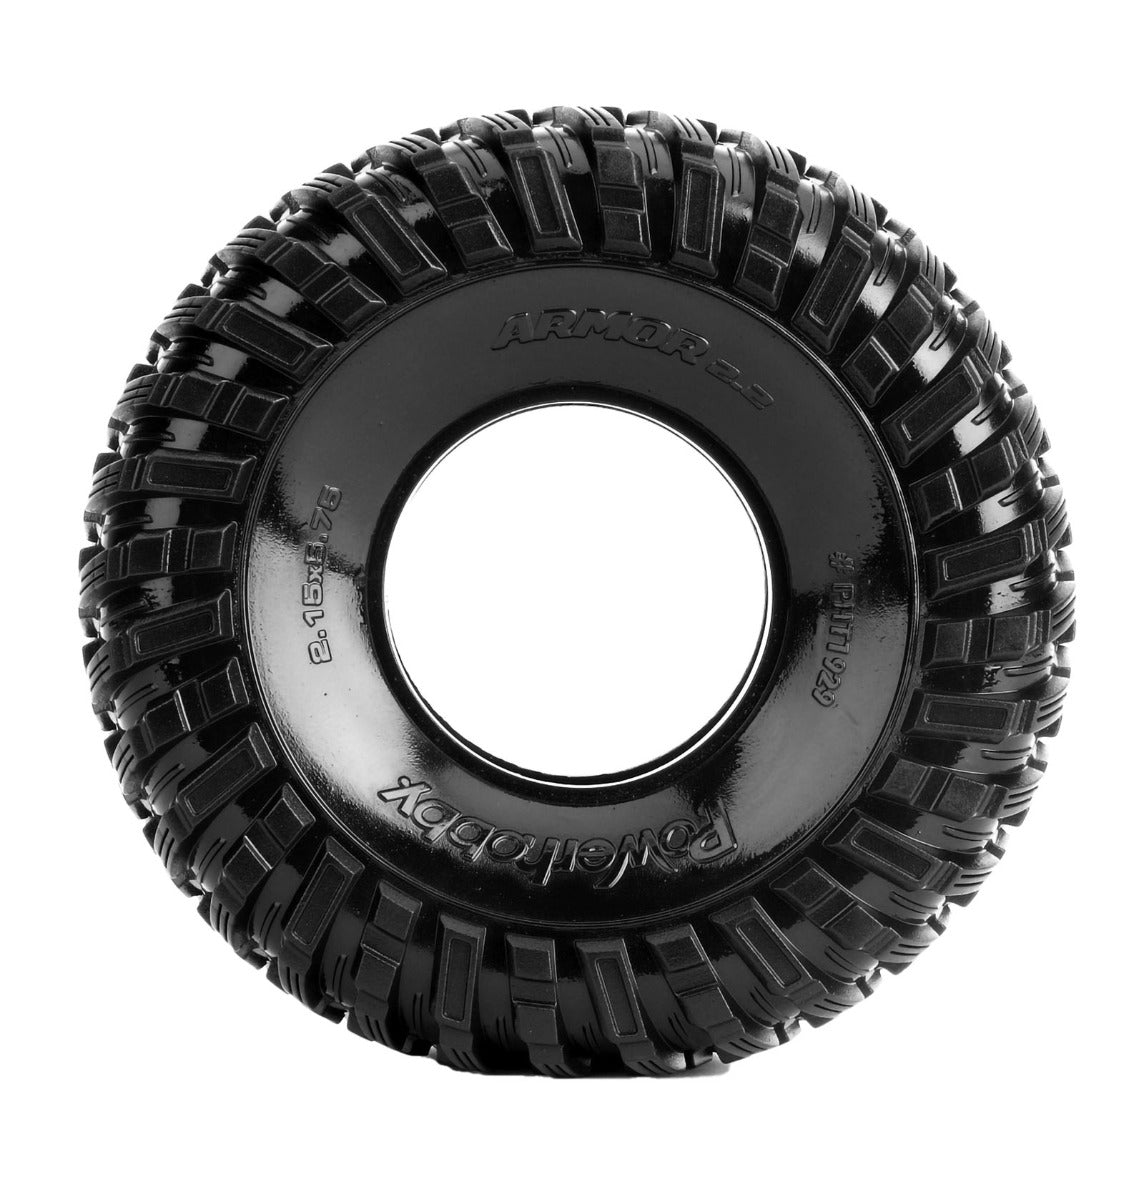 Powerhobby Armor 2.2 Crawler Tires with Dual Stage Soft and Medium Foams - PowerHobby